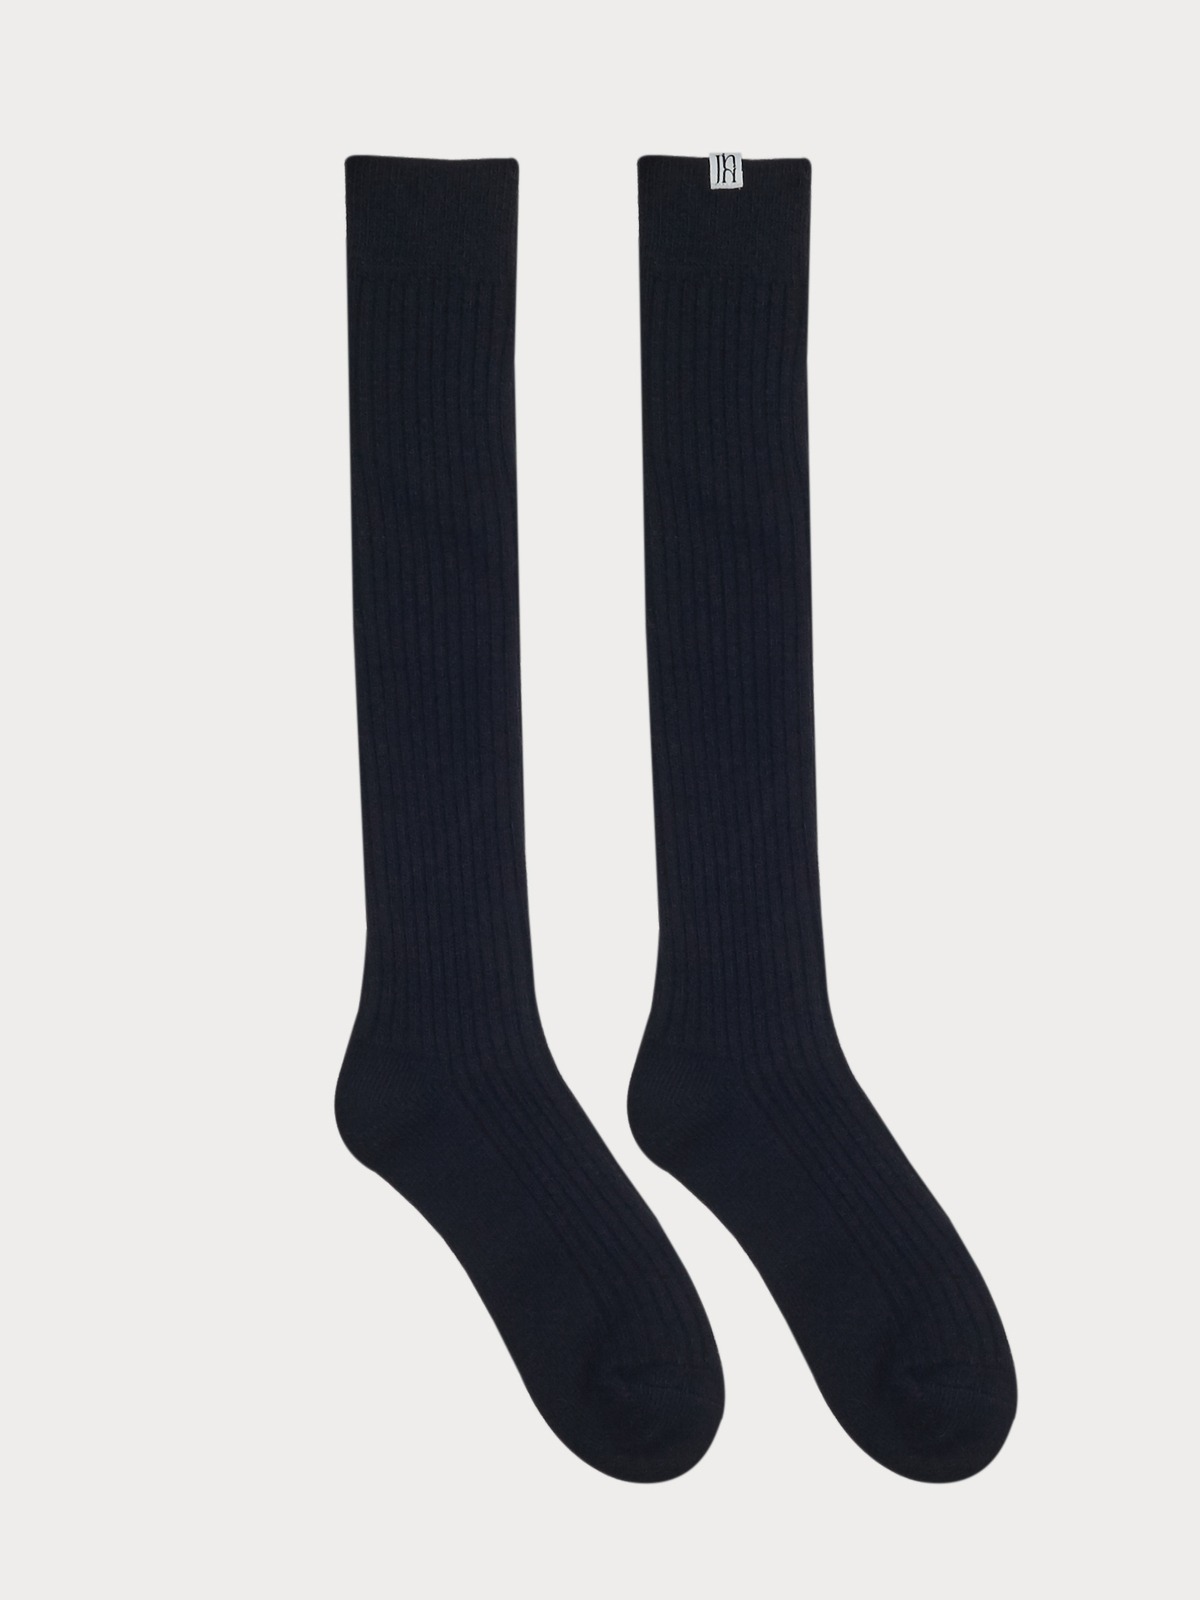 010 Cashmere Knee Knit Socks (Black)